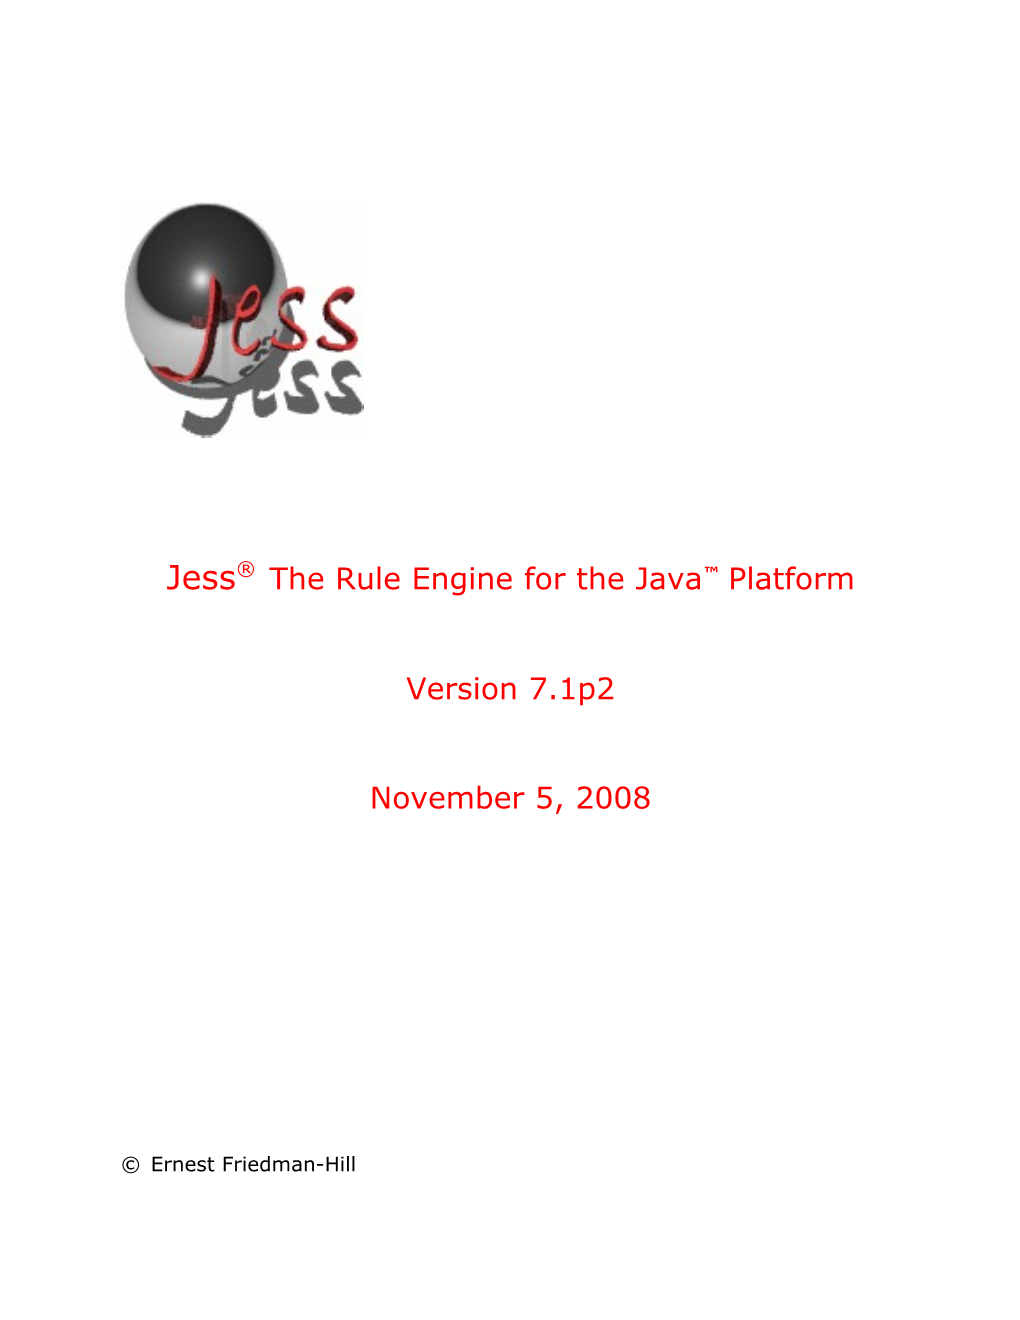 Jess the Rule Engine for the Java Platform